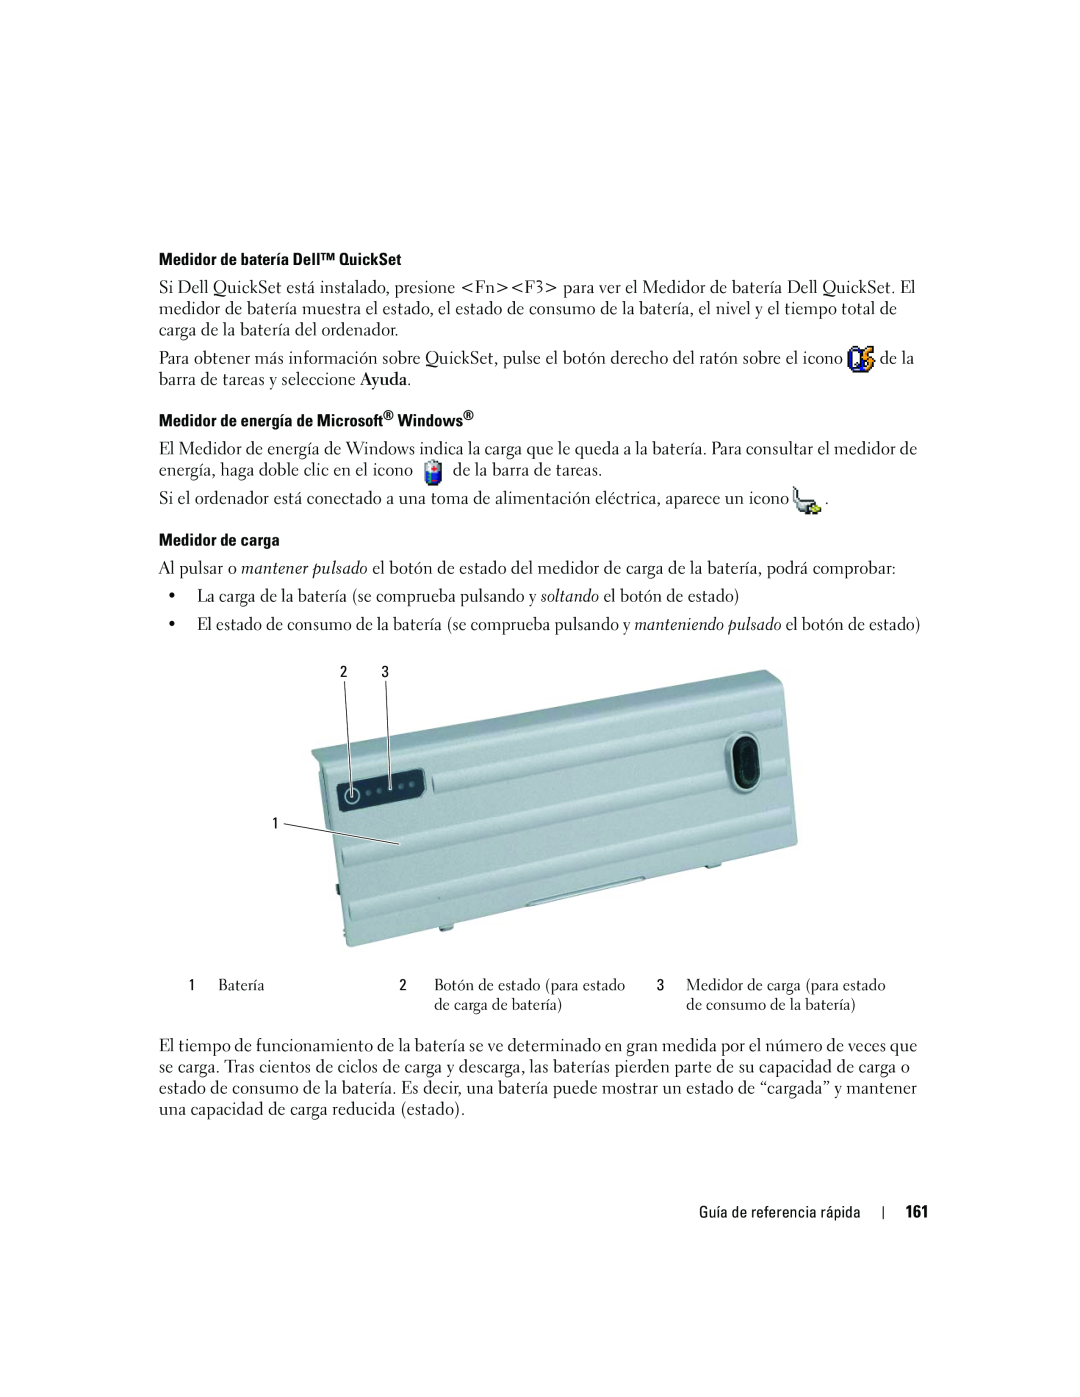 Dell ATG D620 manual Medidor de batería Dell QuickSet, Medidor de energía de Microsoft Windows, Medidor de carga 